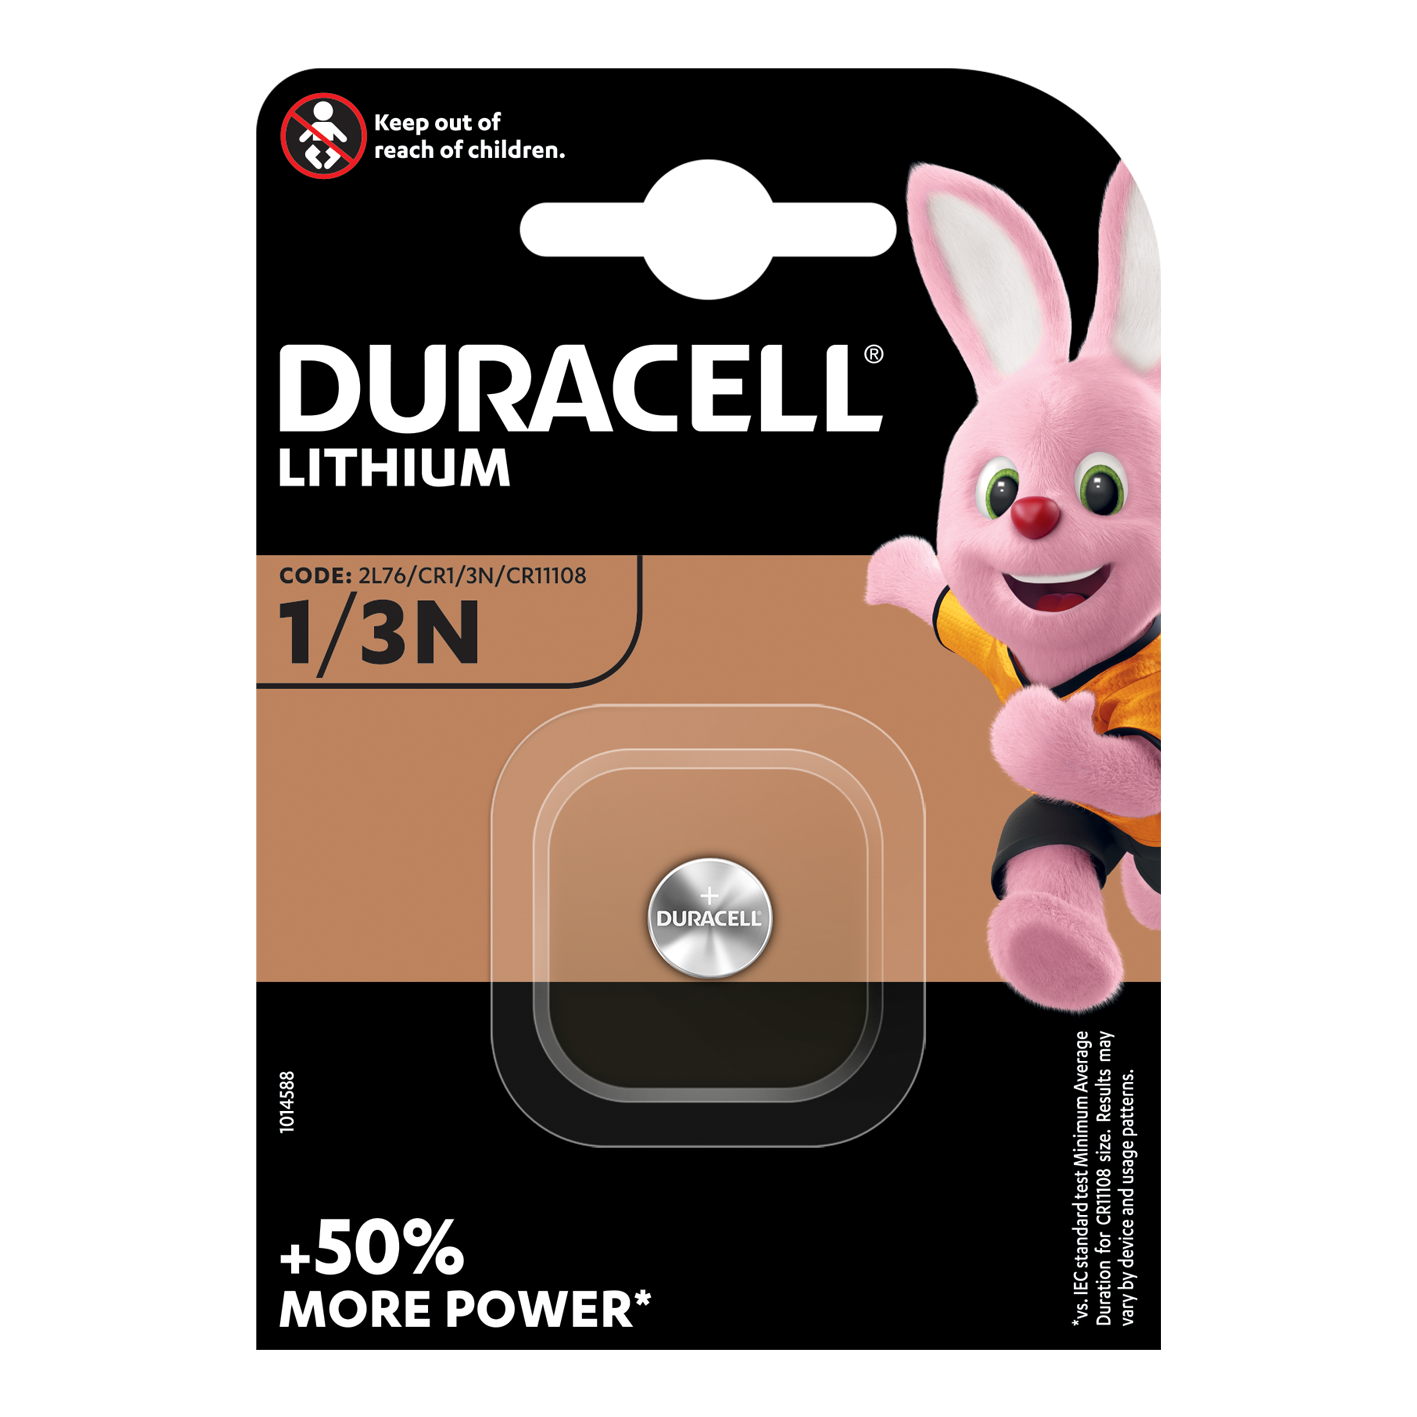 Duracell DL1/3N (CR1/3N) 3V Lithium, Pack of 1